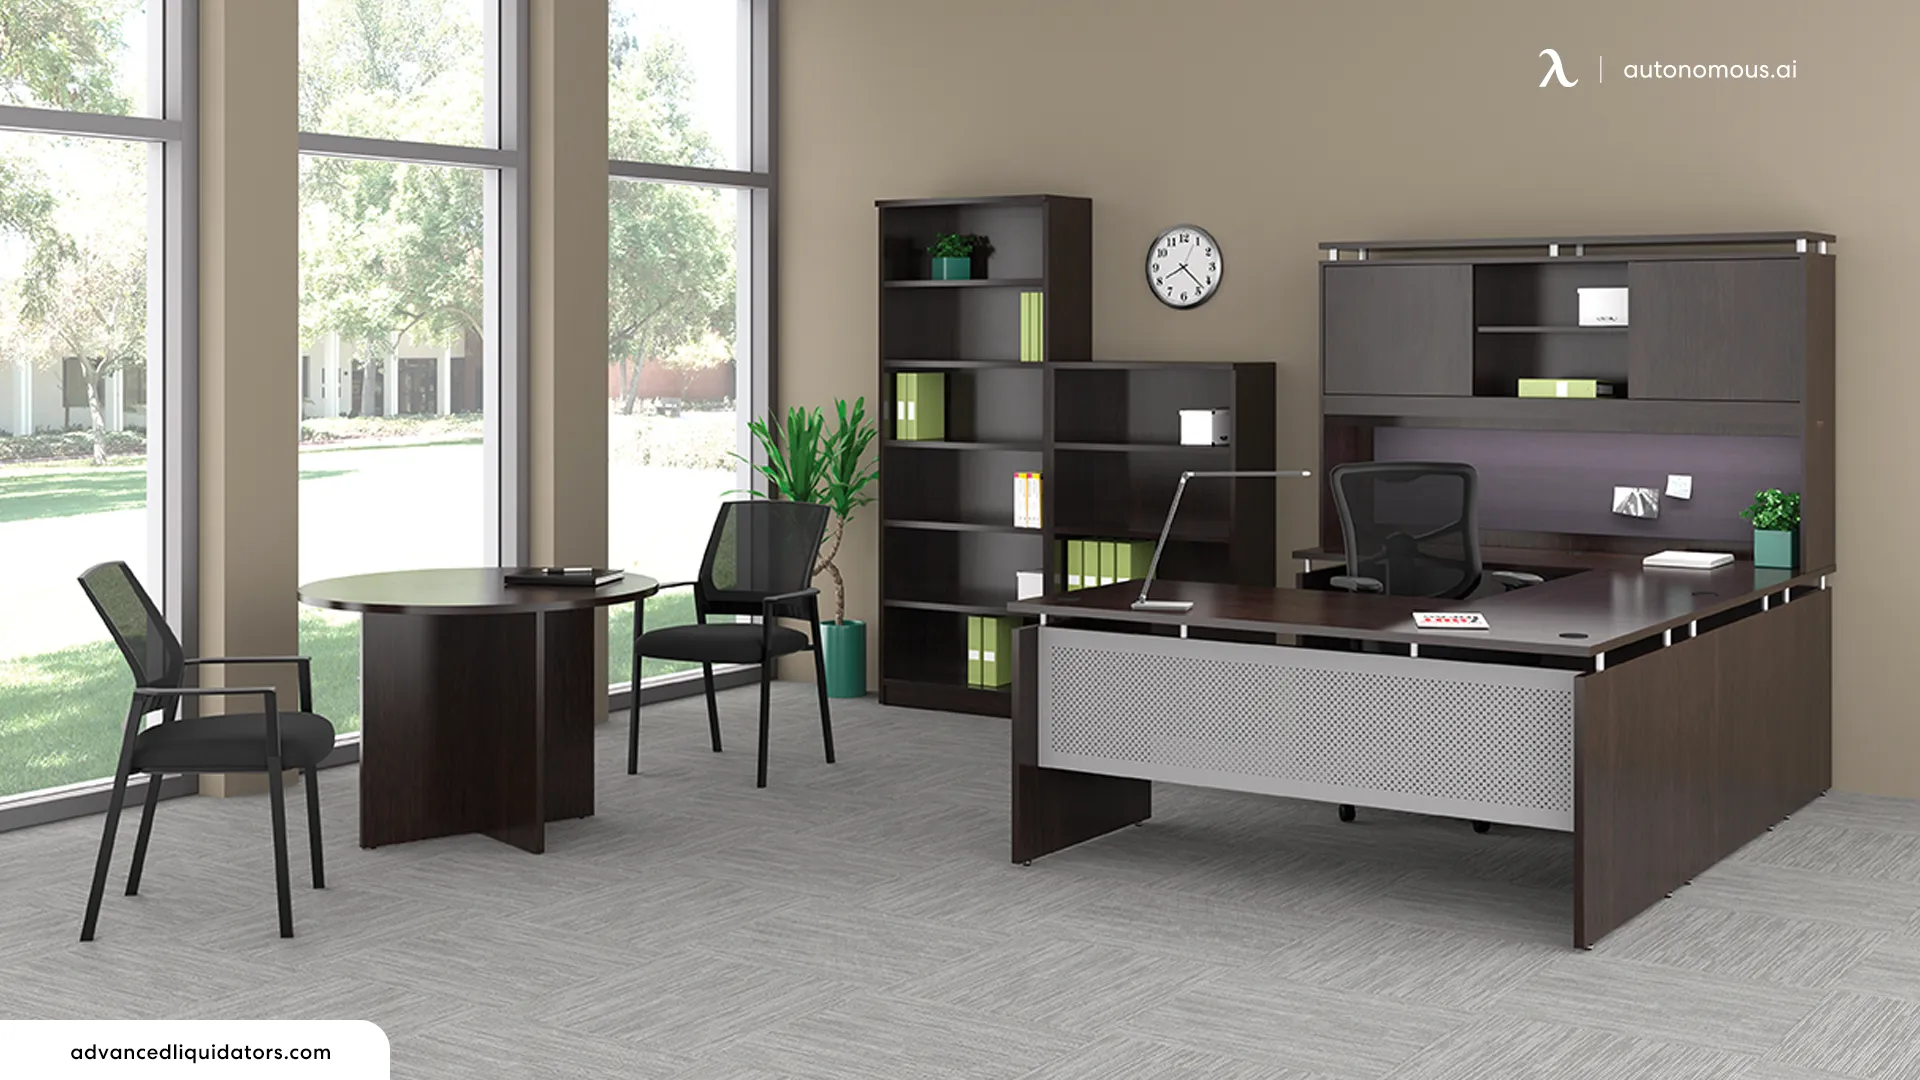 Advanced Liquidators - Office Furniture in Los Angeles